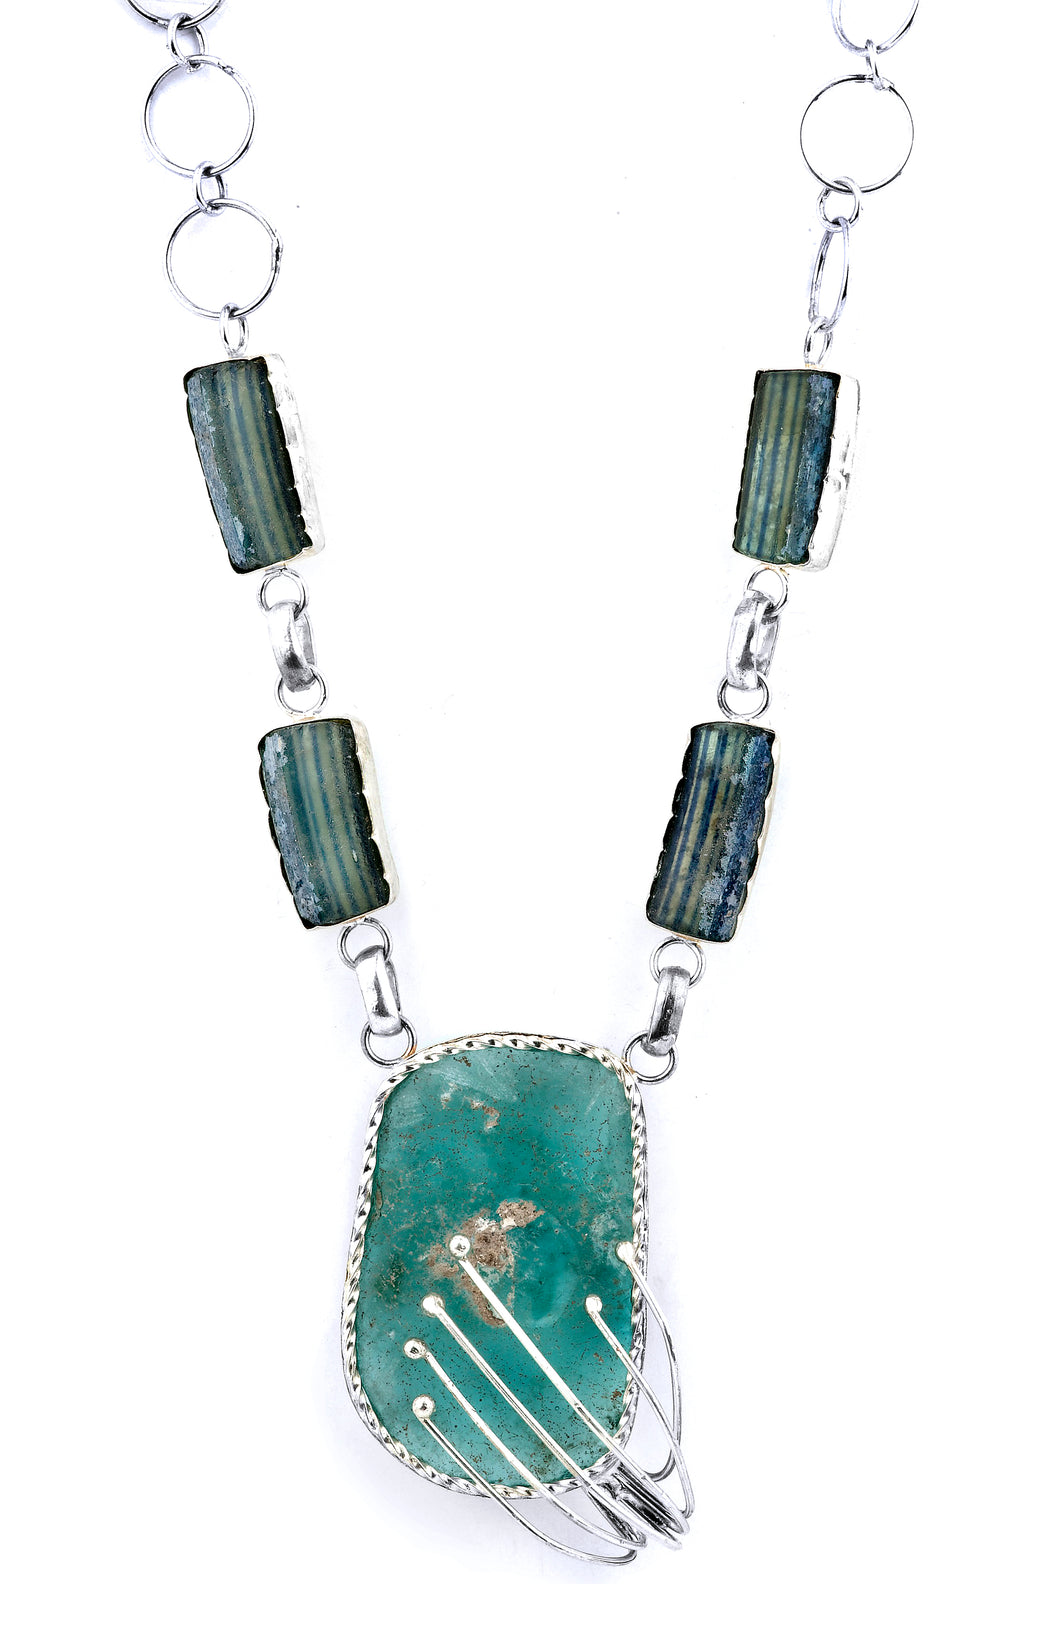 Roman Glass Necklace